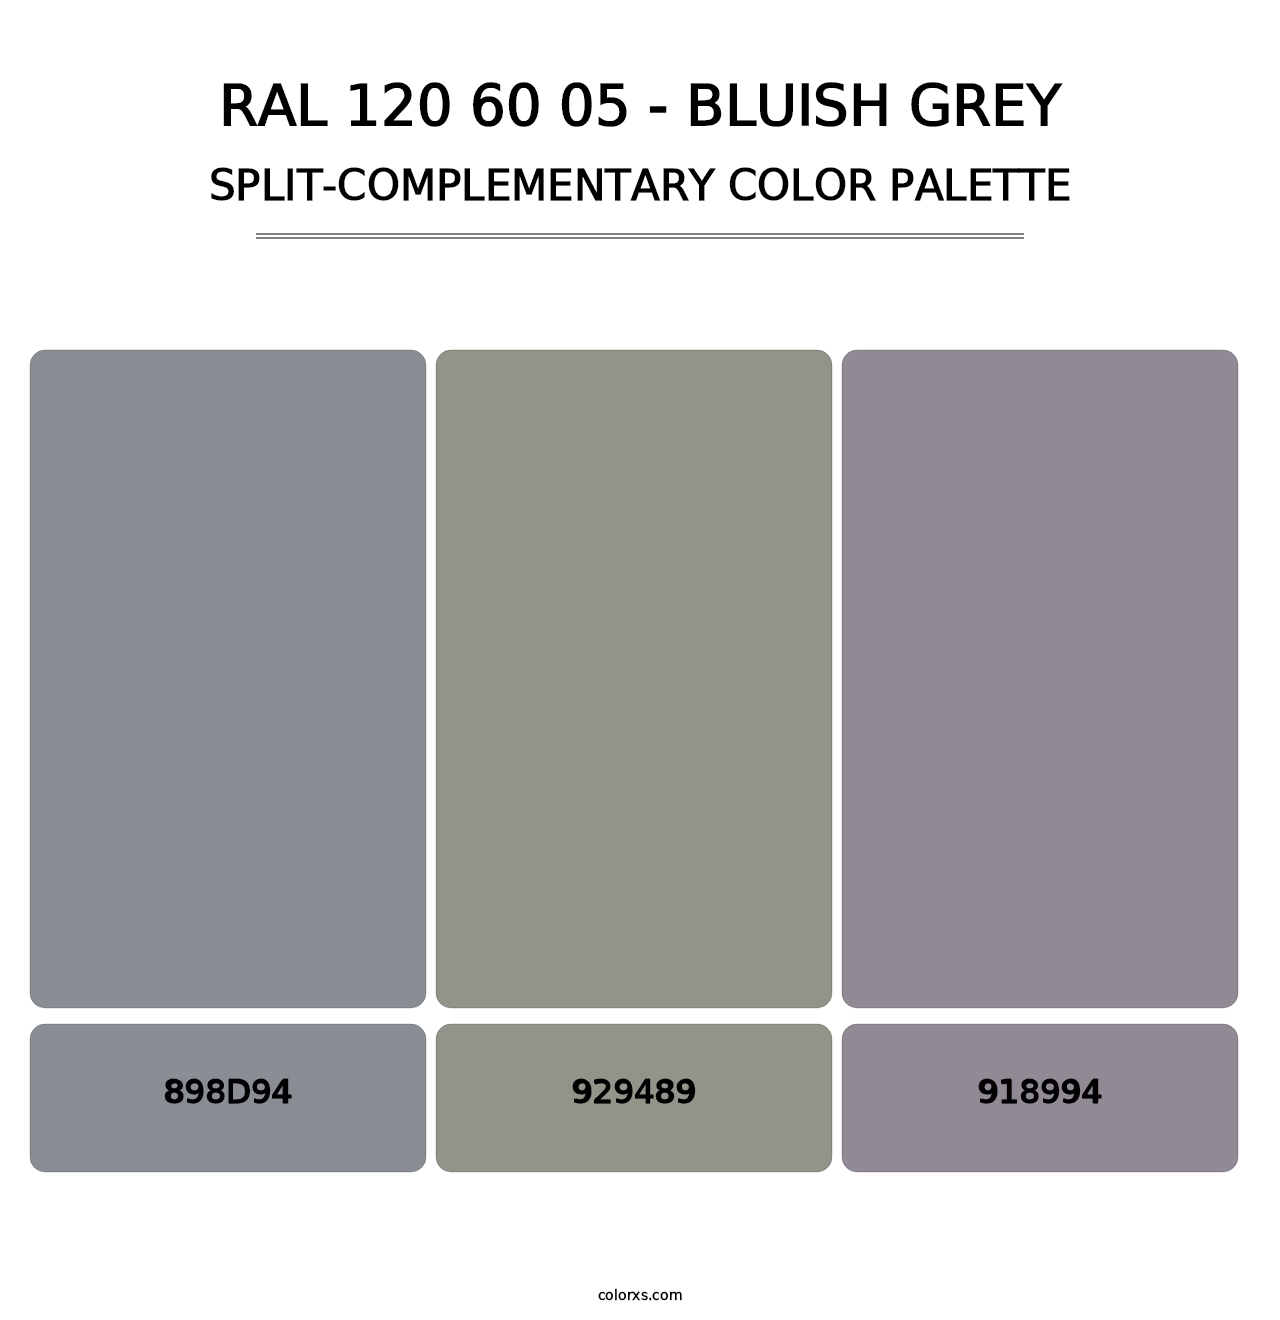 RAL 120 60 05 - Bluish Grey - Split-Complementary Color Palette